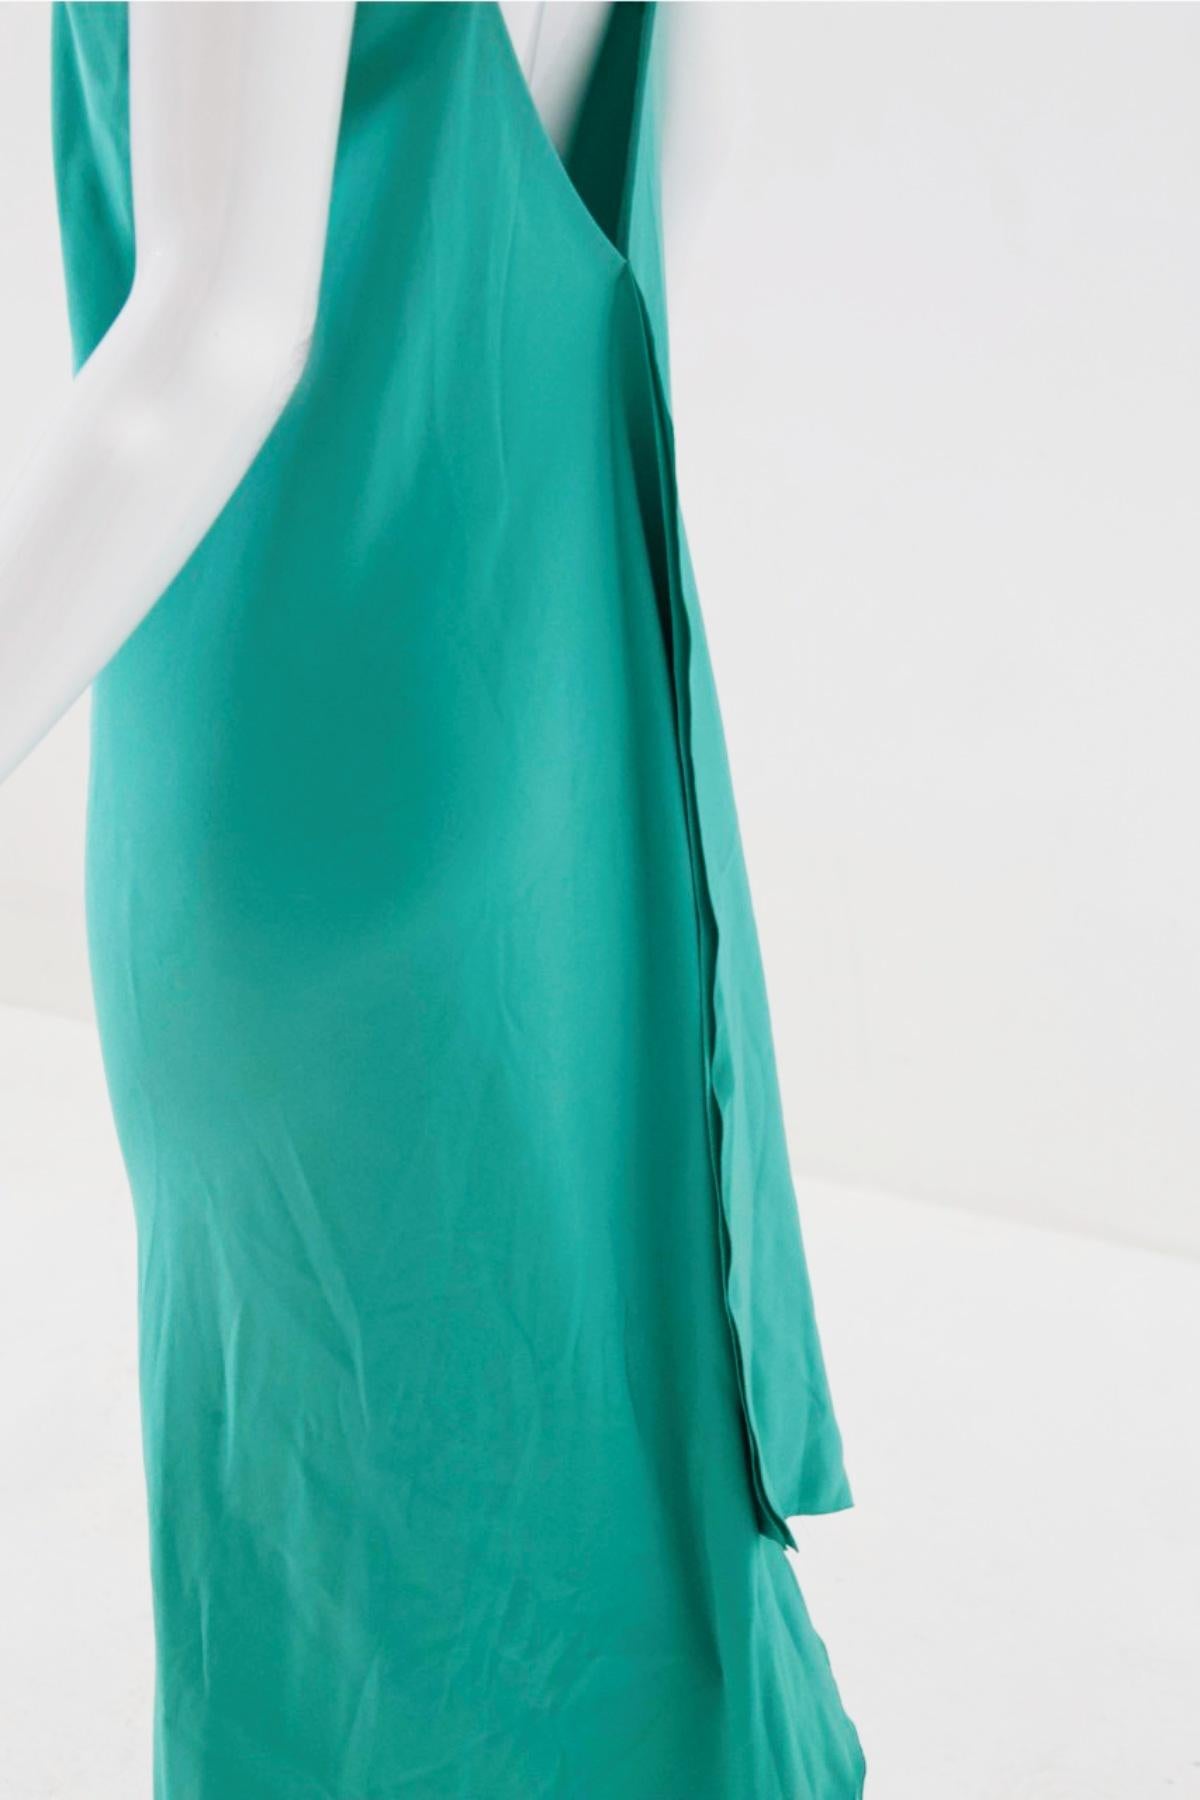 Pierre Cardin Vintage Teal Long Dress For Sale 3